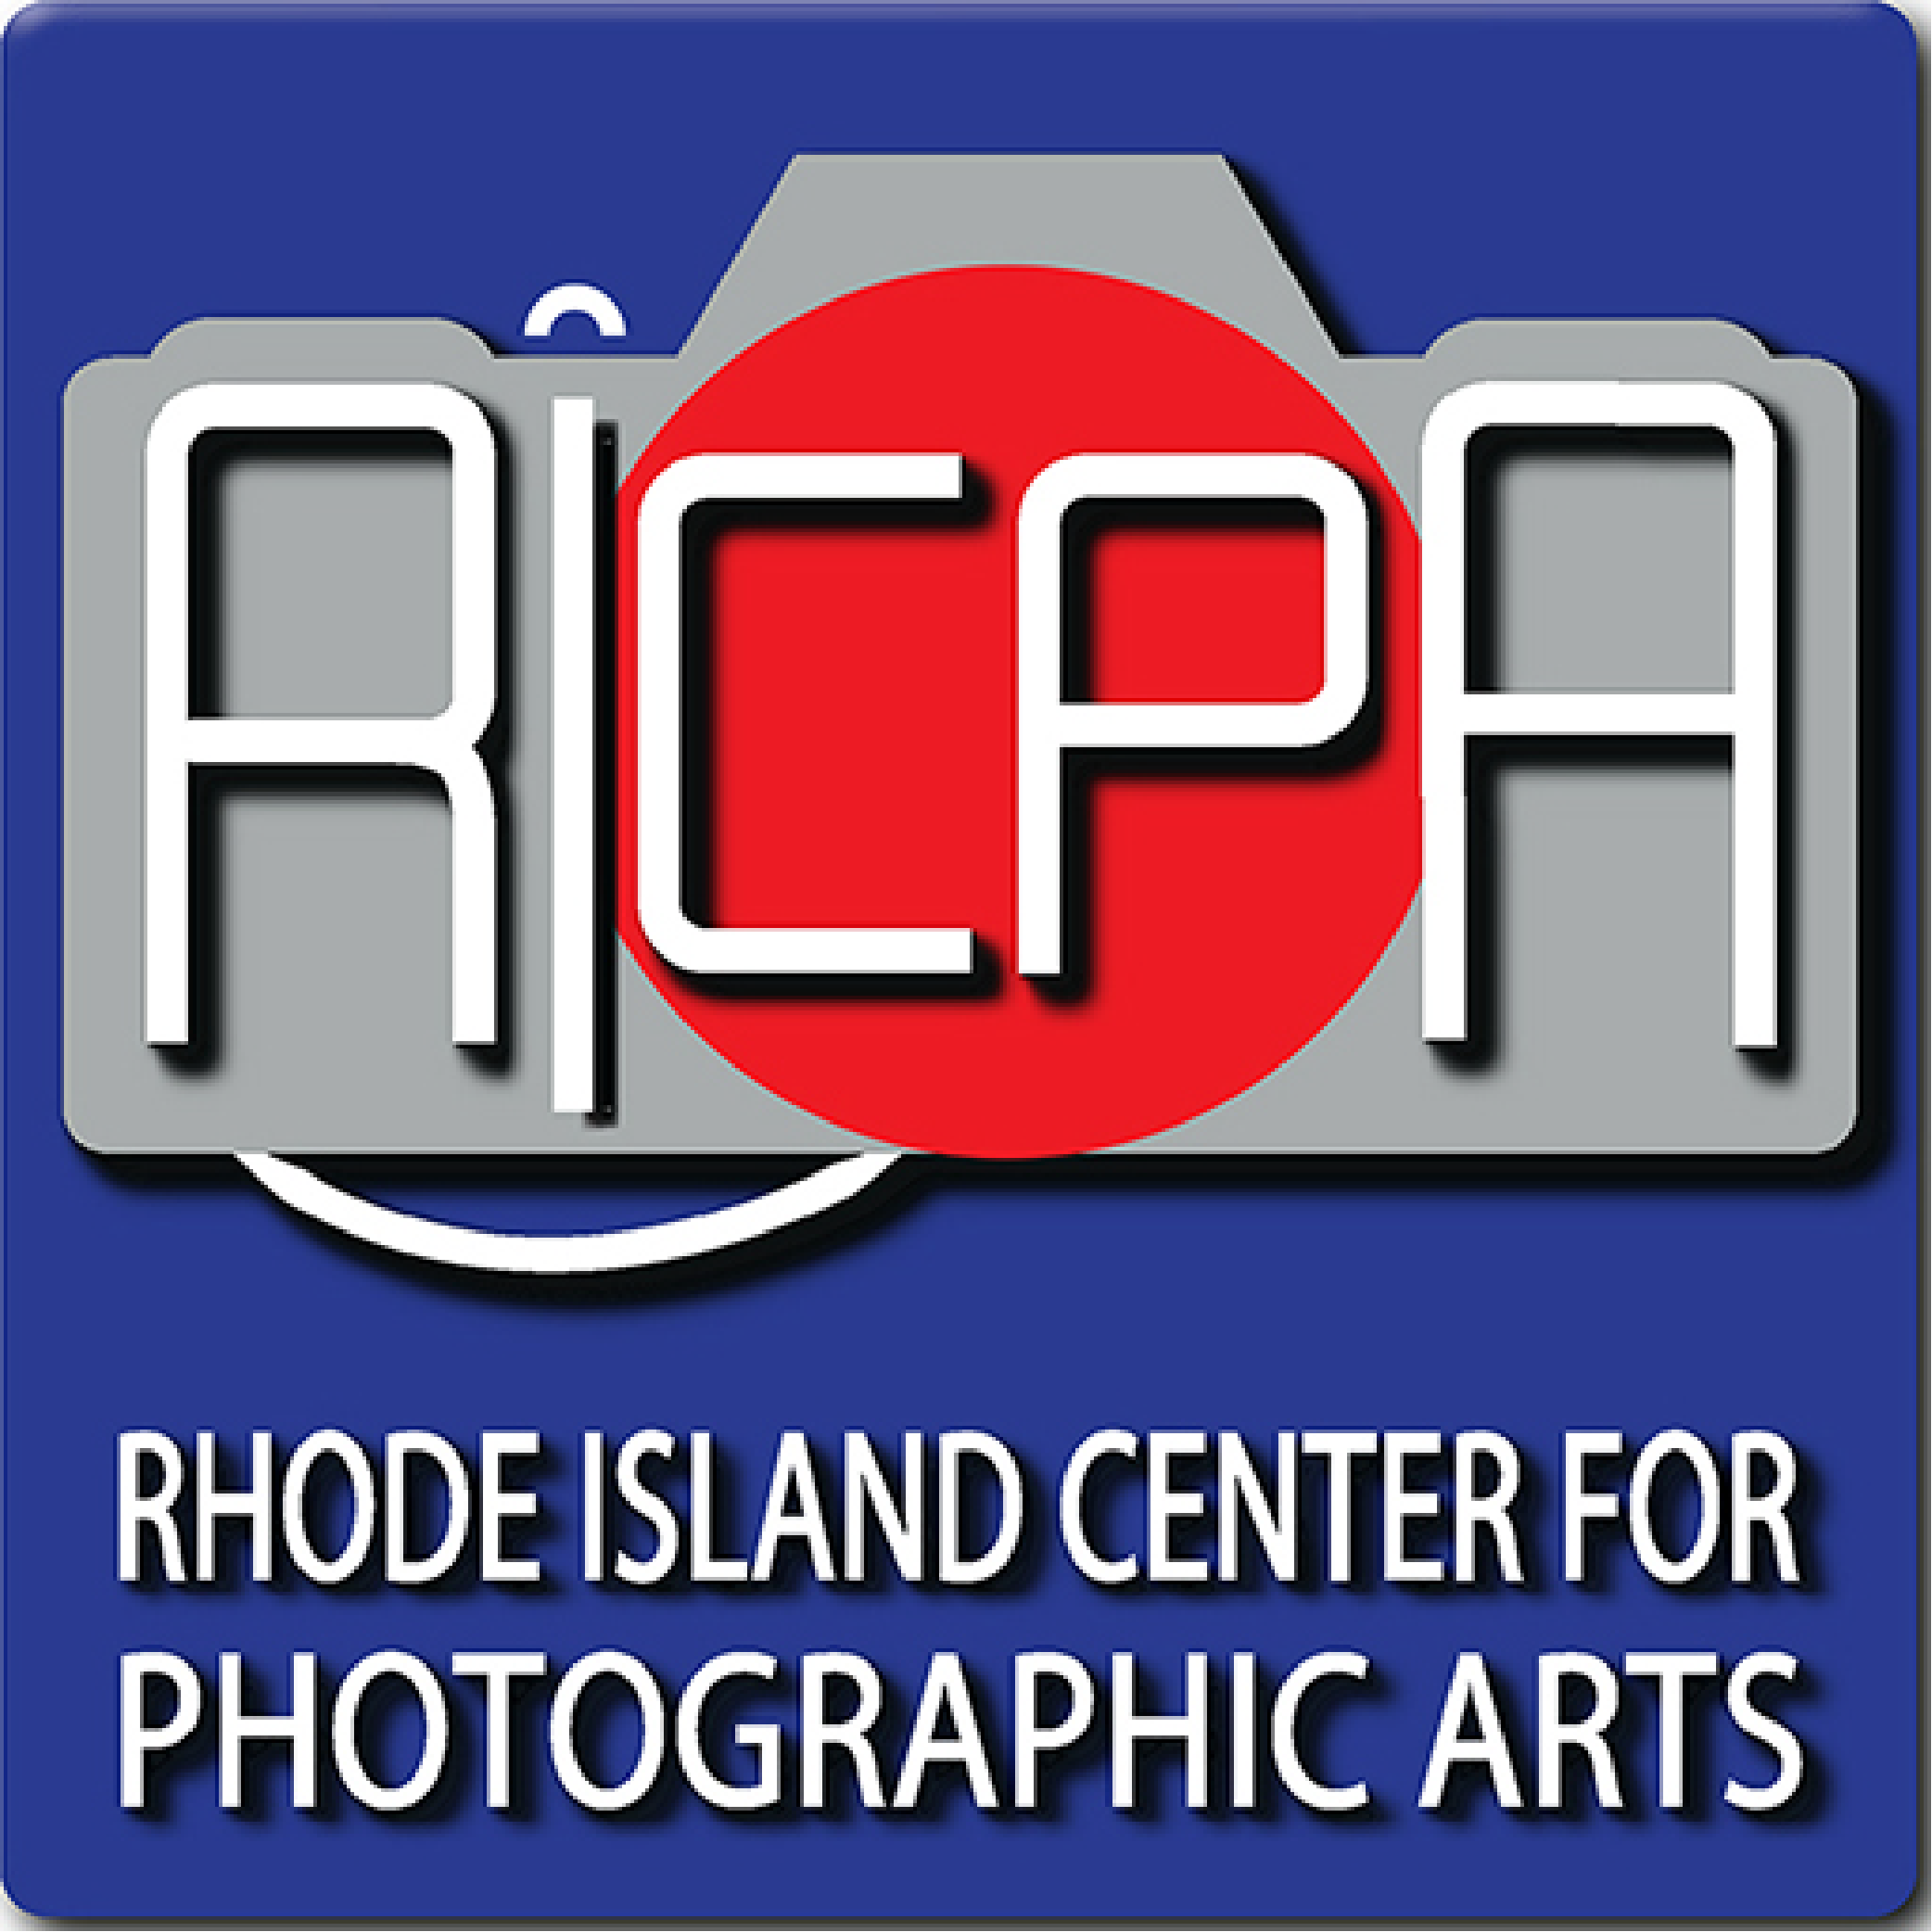 Rhode Island Center for Photographic Arts (RICPA)